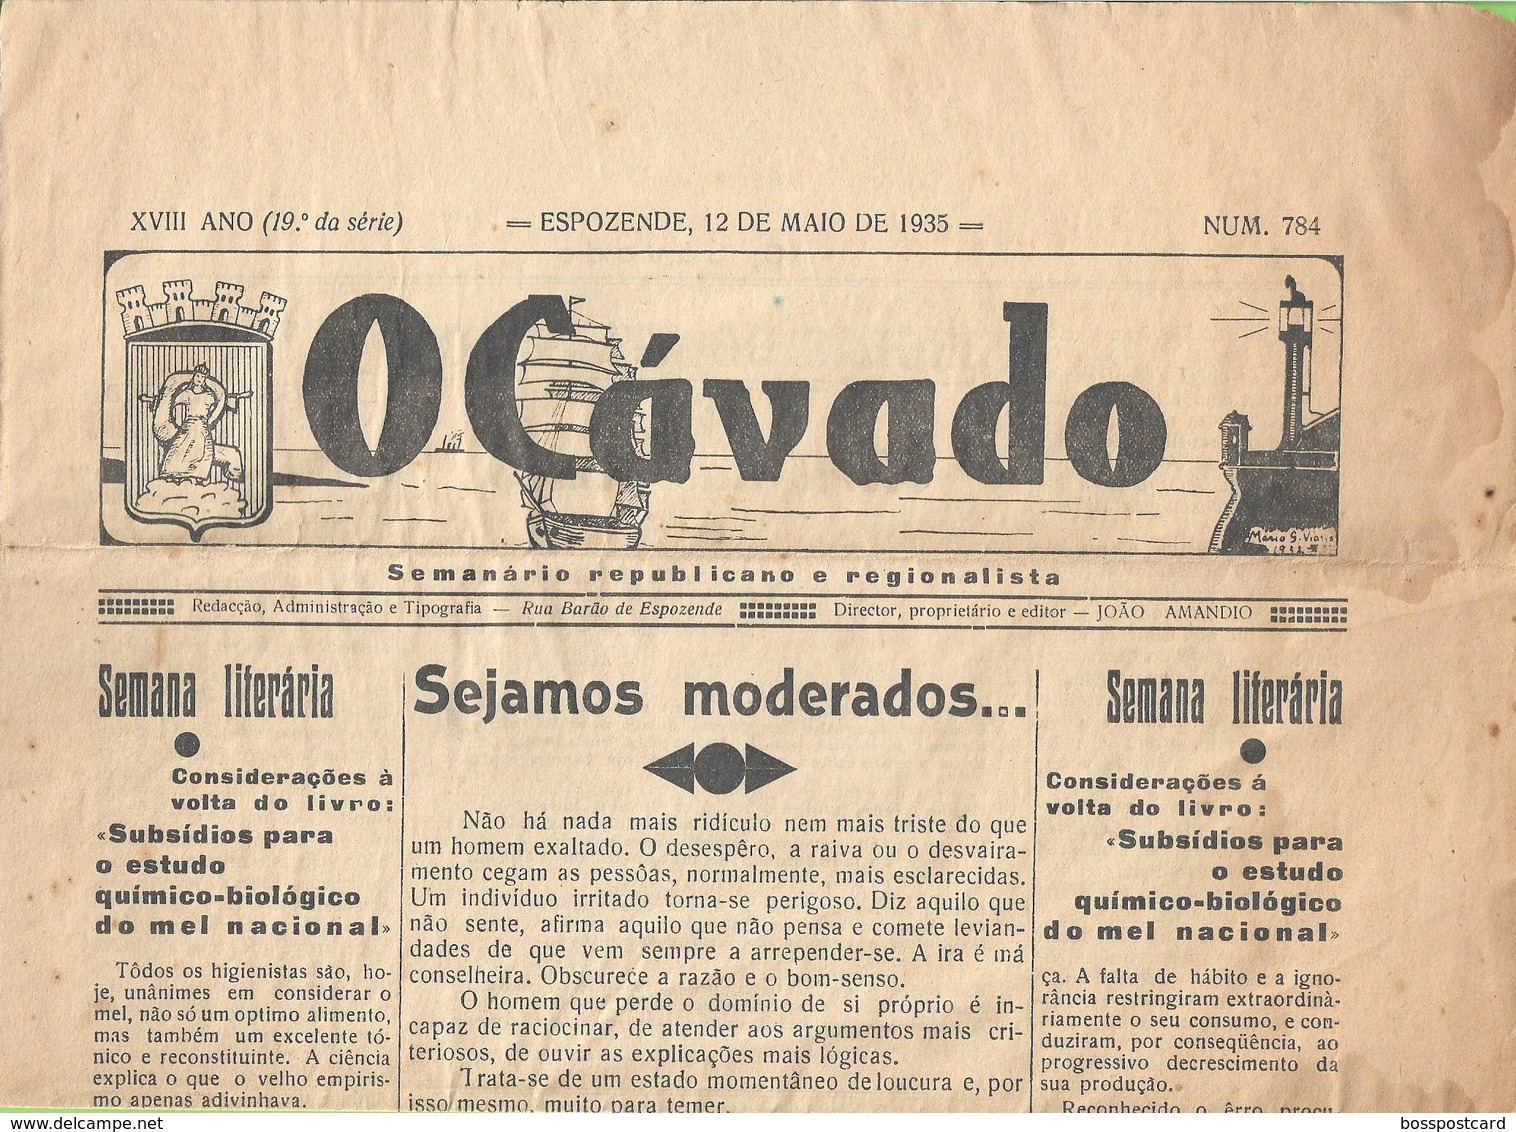 Esposende - Jornal O Cávado Nº 784 De 12 De Maio De 1935. Braga. - Testi Generali